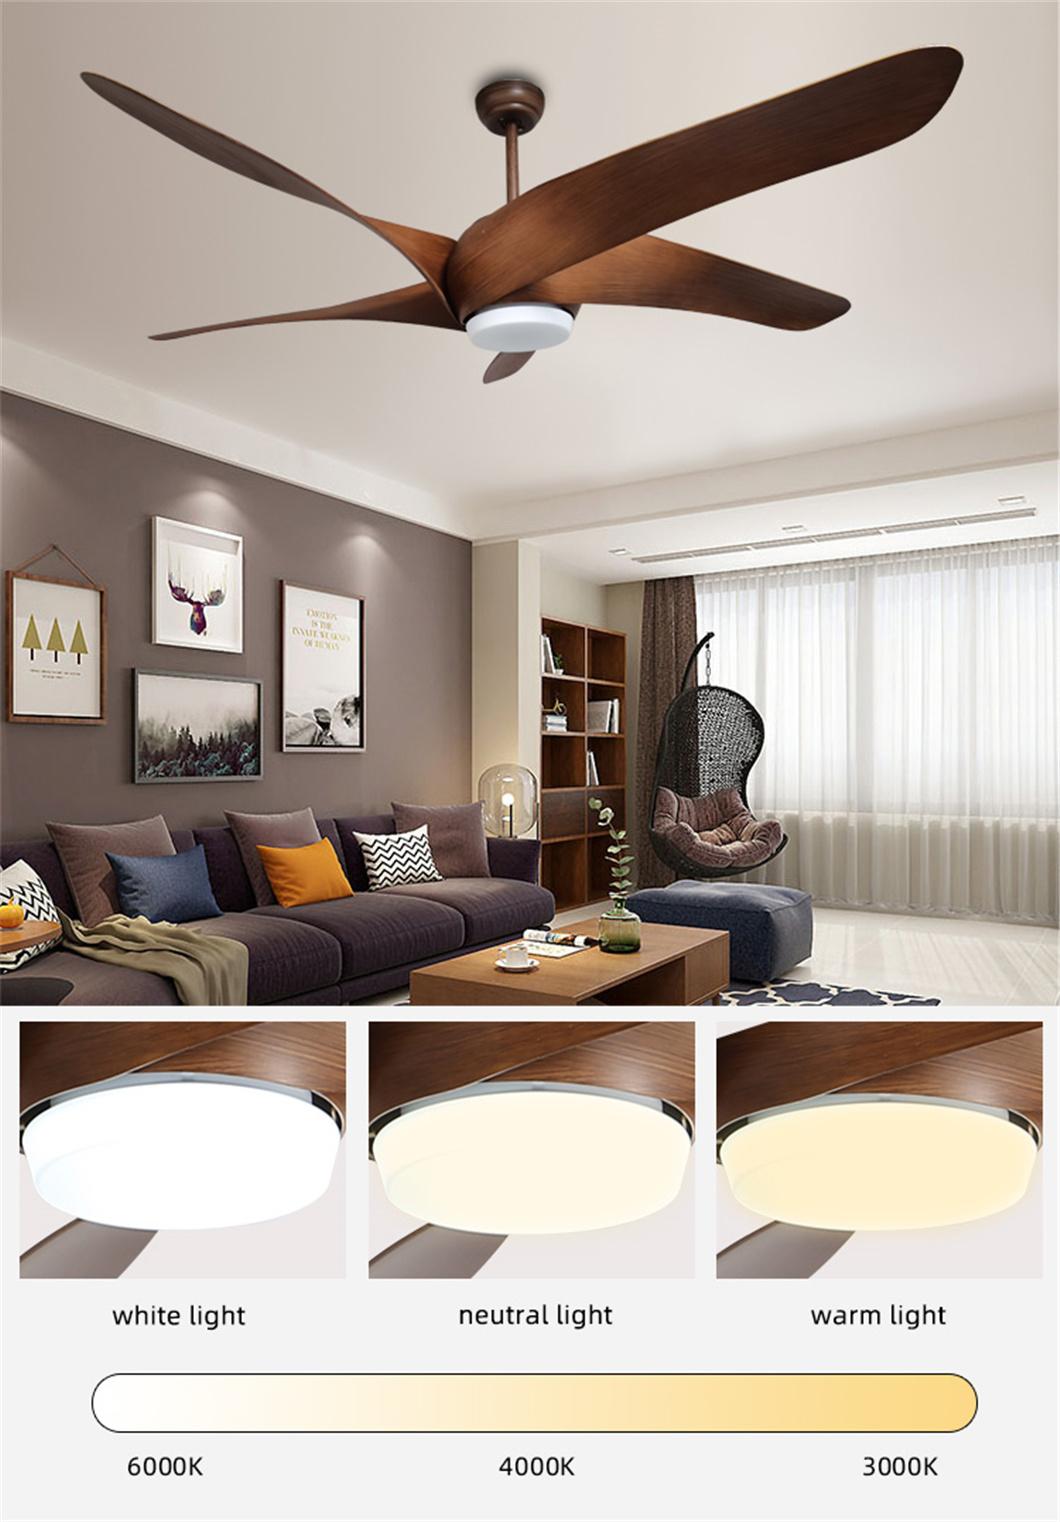 Classical Decorative 5 Fan Speed 60 Inch Big Remote Control Ceiling Fan Price